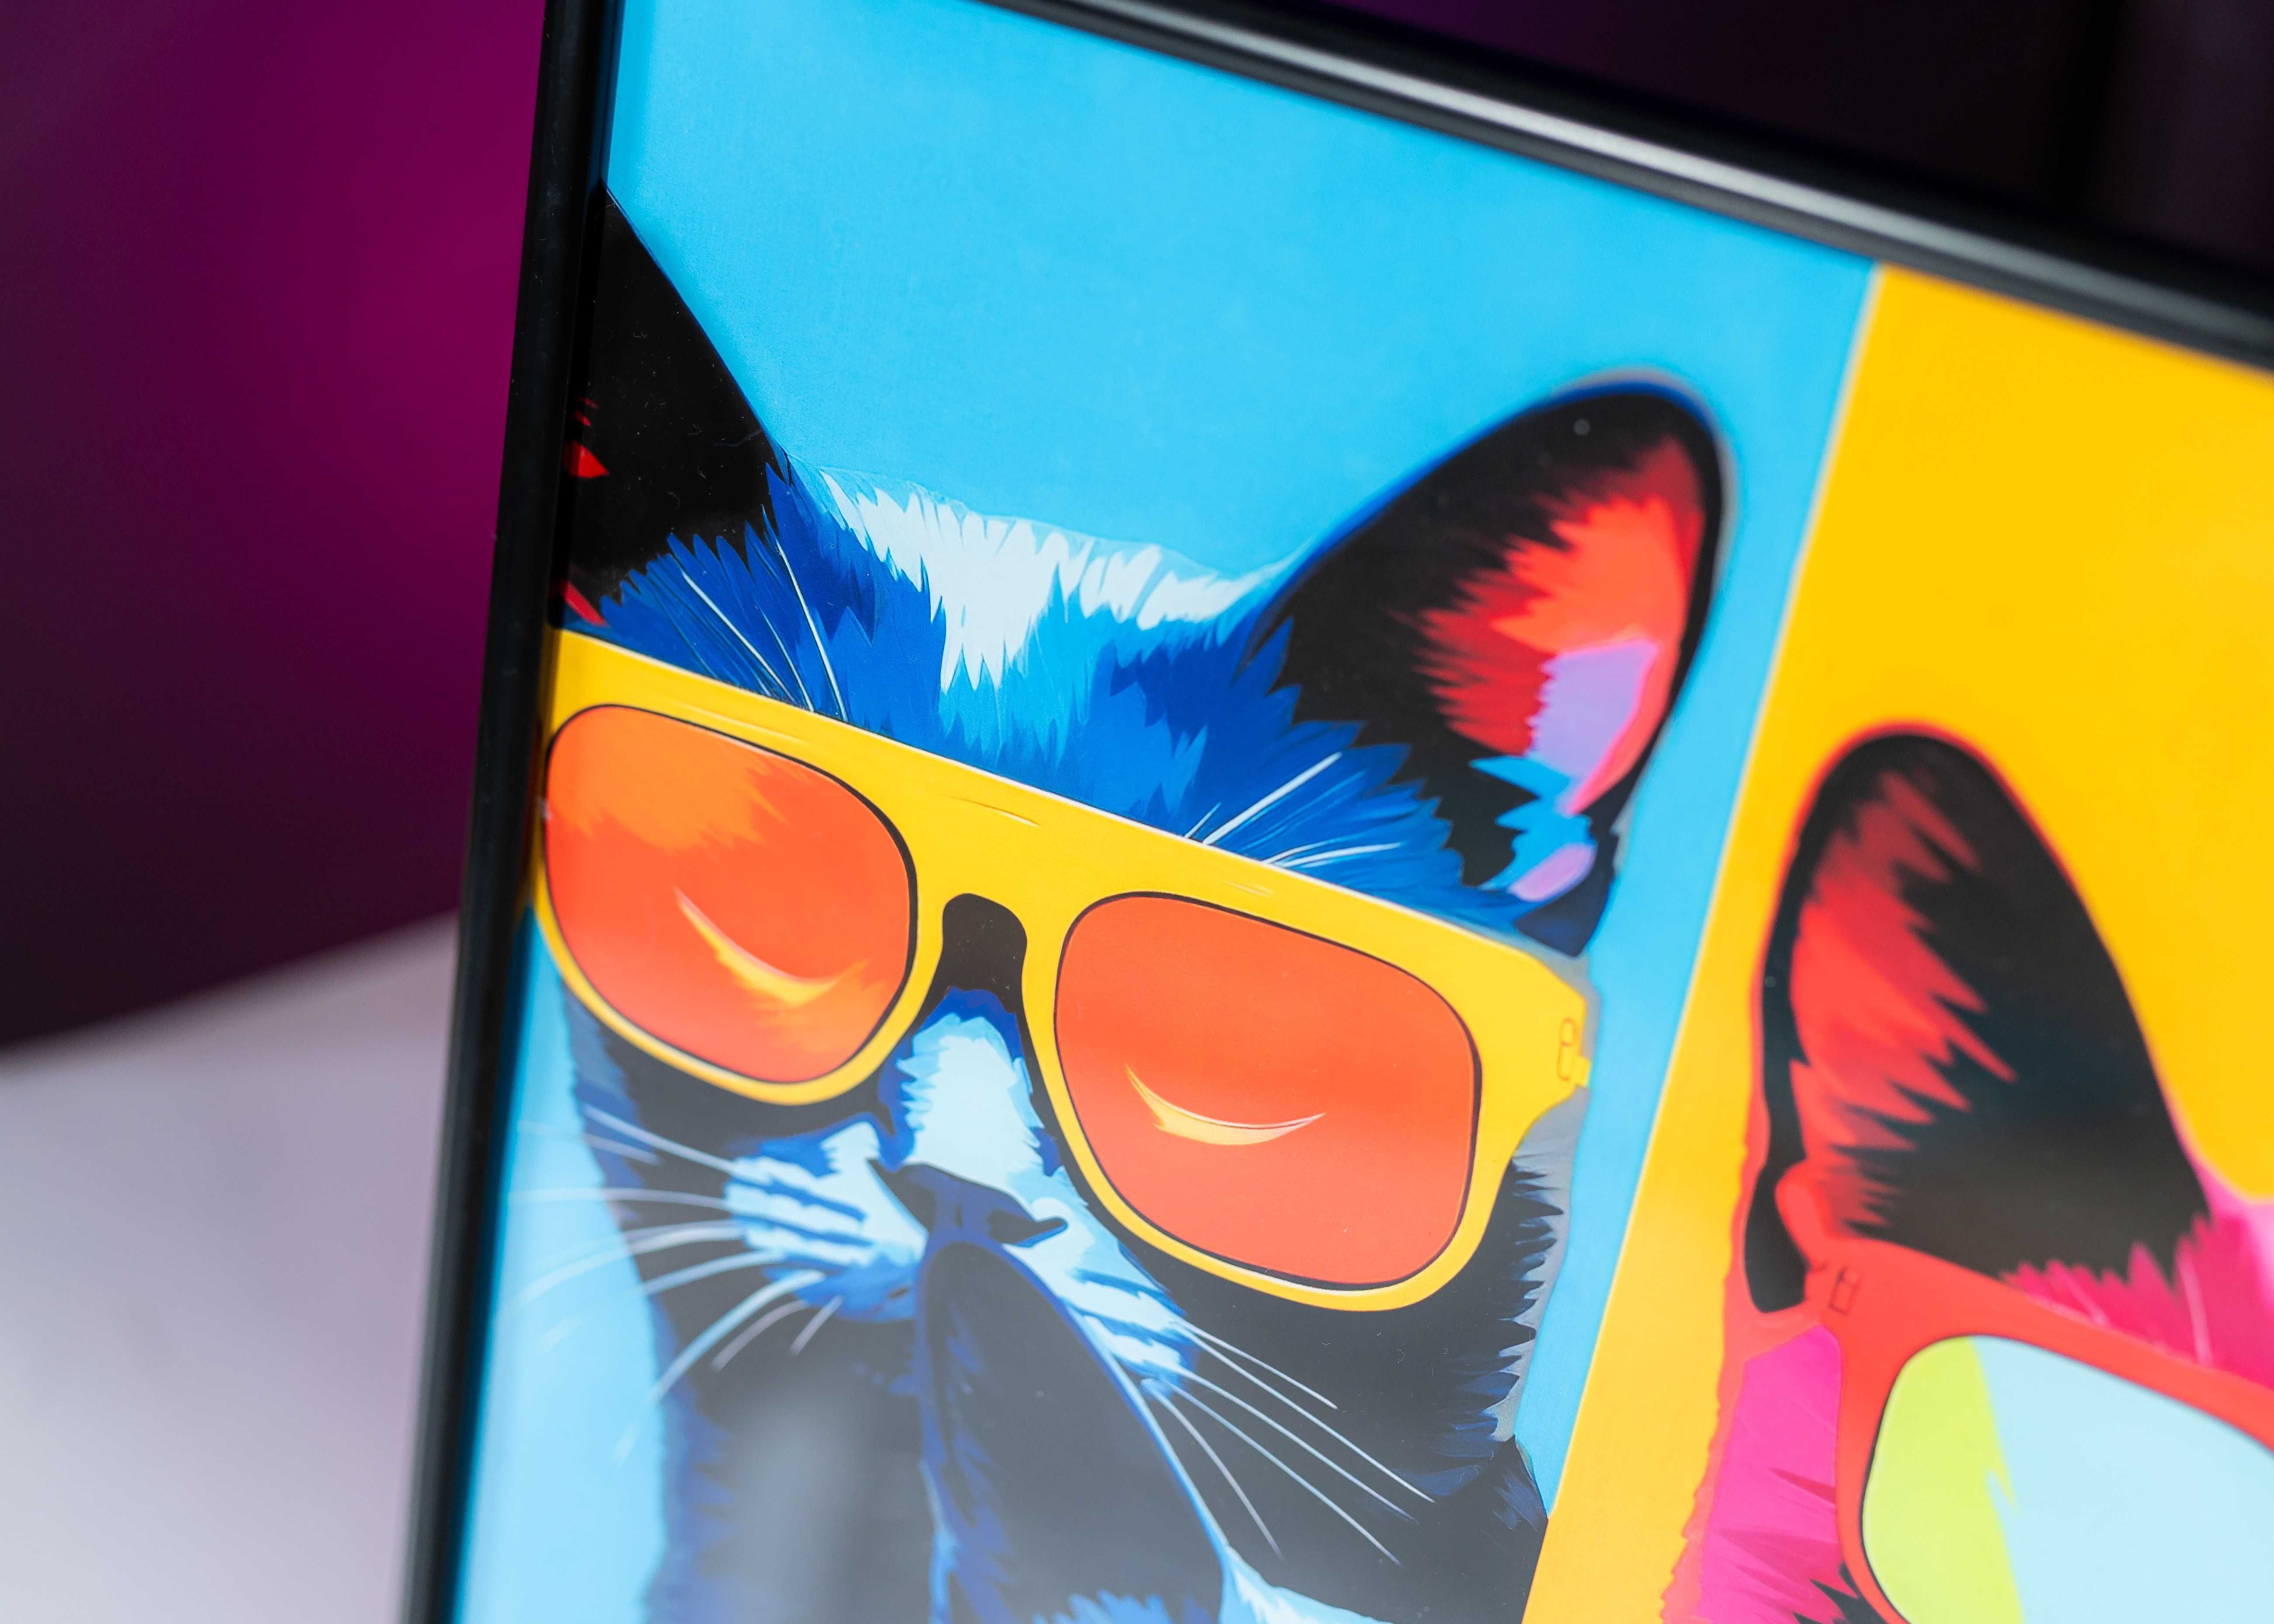 Plakat na Ścianę Obraz Kwiecisty Kot Sztuka Kolory 50x70 cm Premium